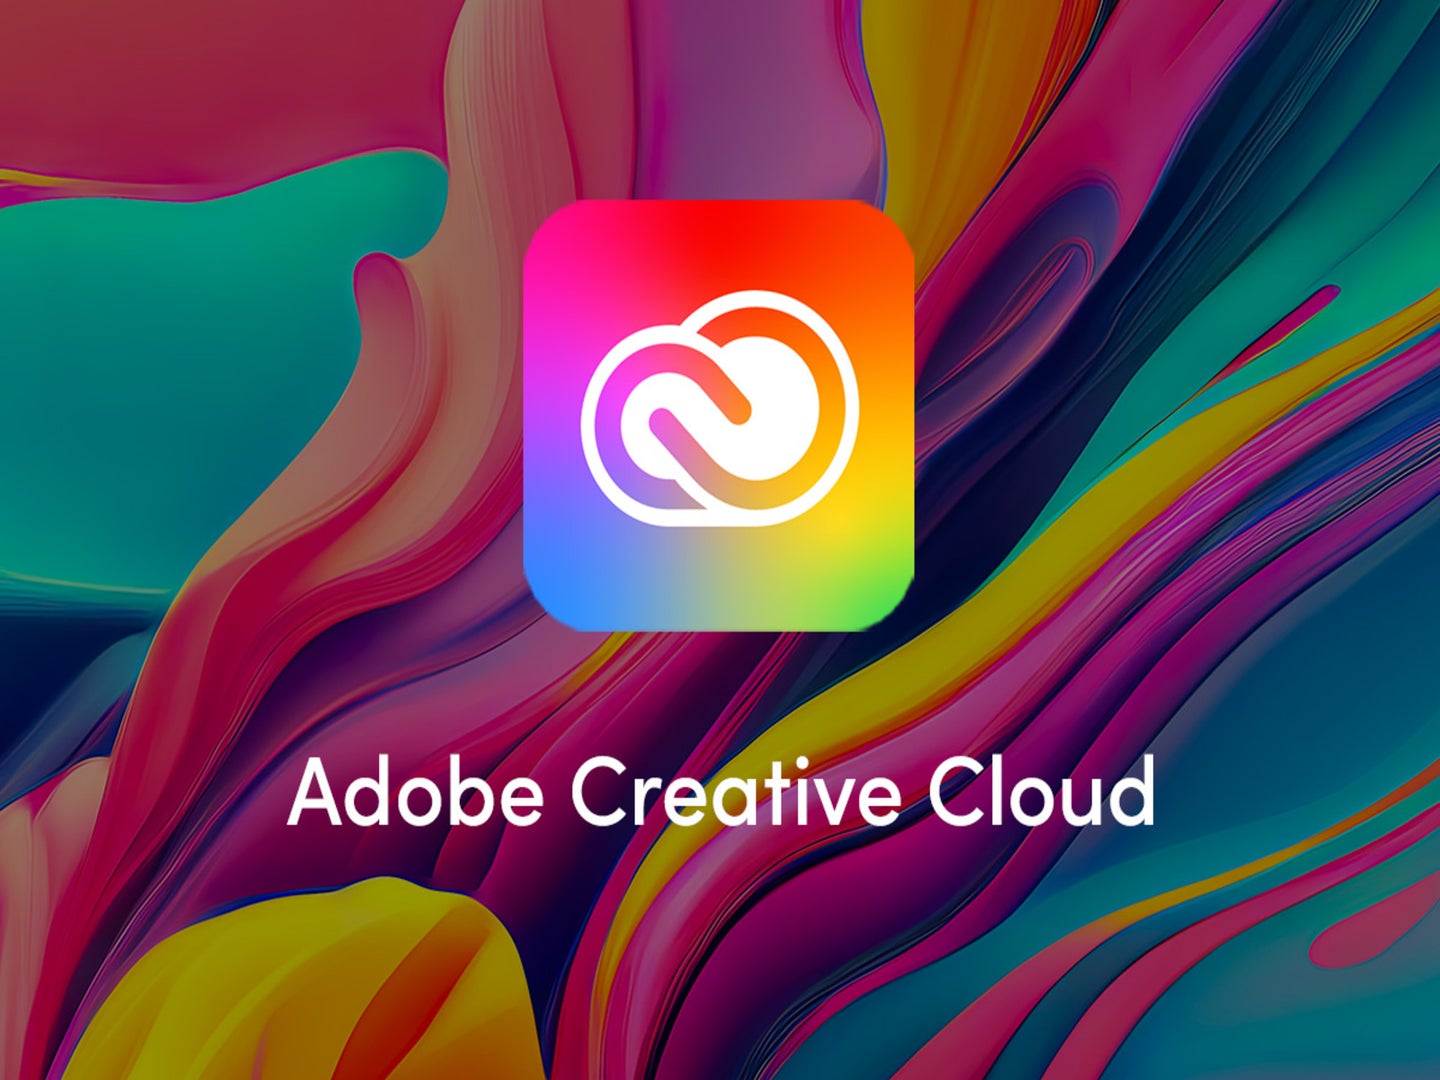 An Adobe Creative Cloud advert